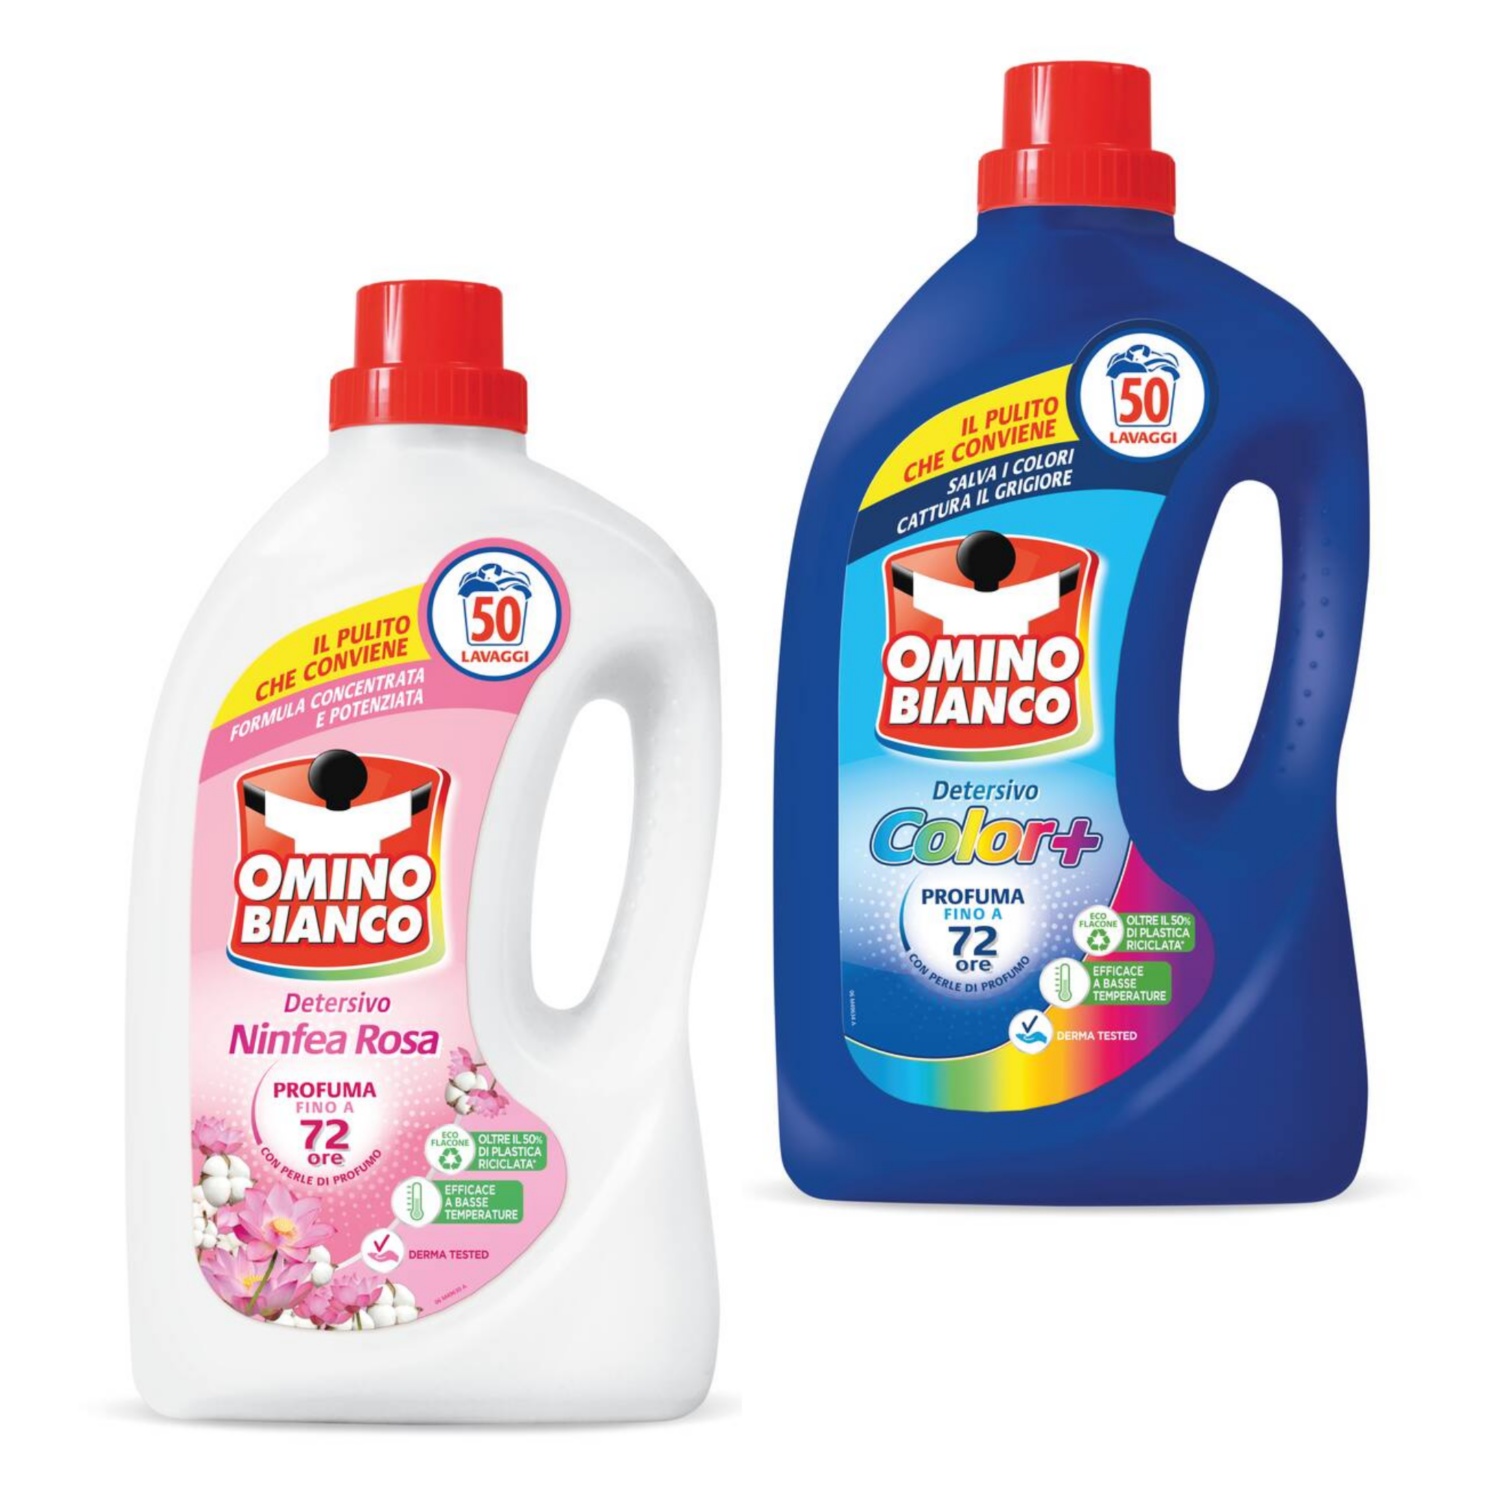 OMINO BIANCO Detergent